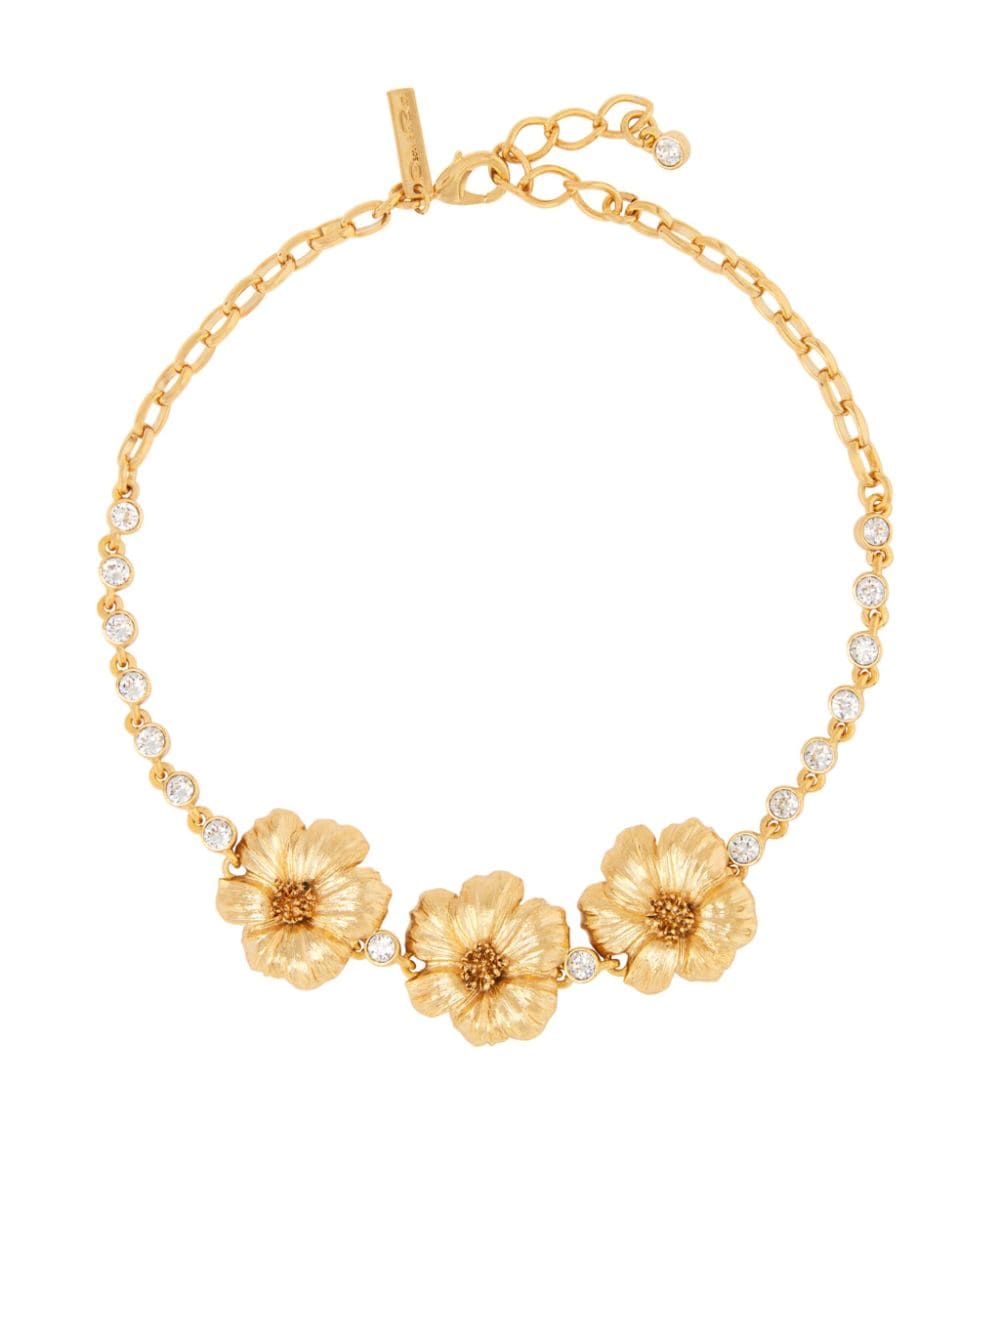 Oscar de la Renta Kristallverzierte Halskette mit Blumen - Gold von Oscar de la Renta